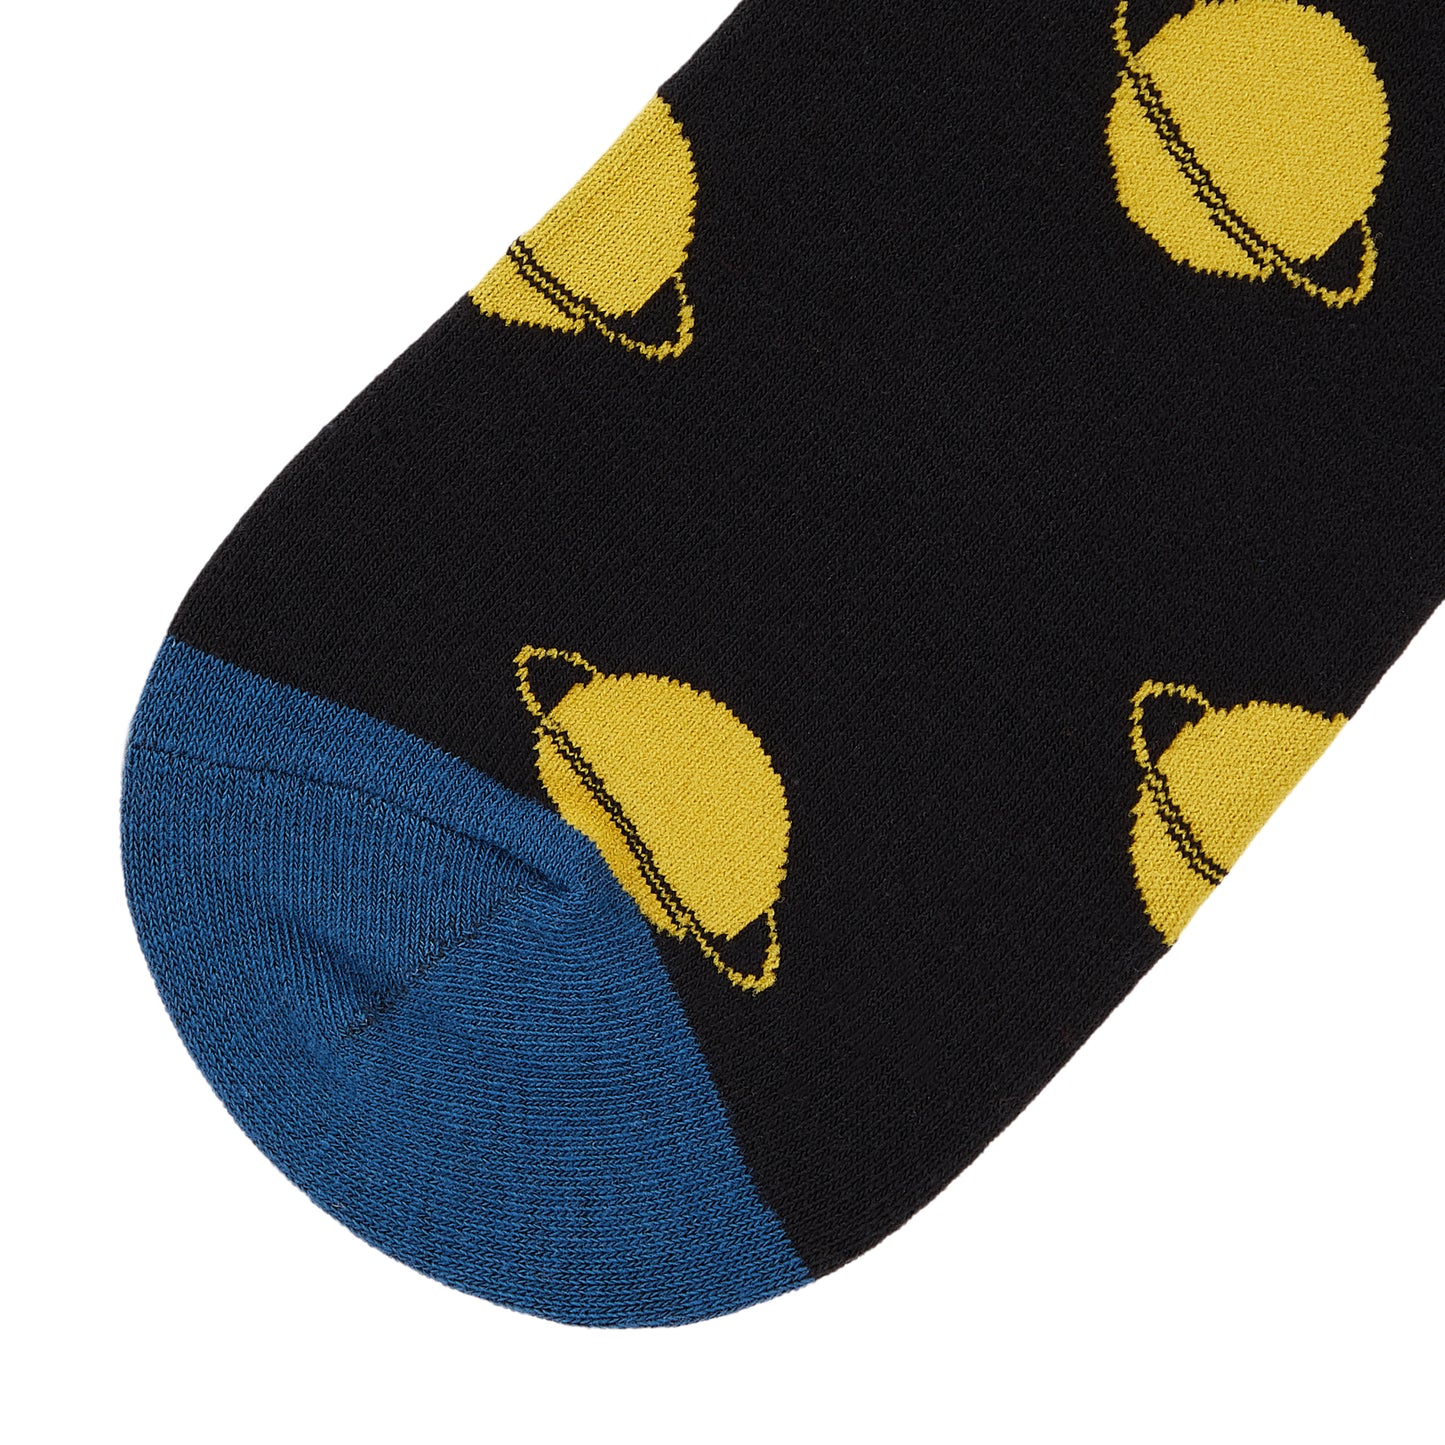 Reach for the Stars Printed Mid-Calf Length Socks - IDENTITY Apparel Shop